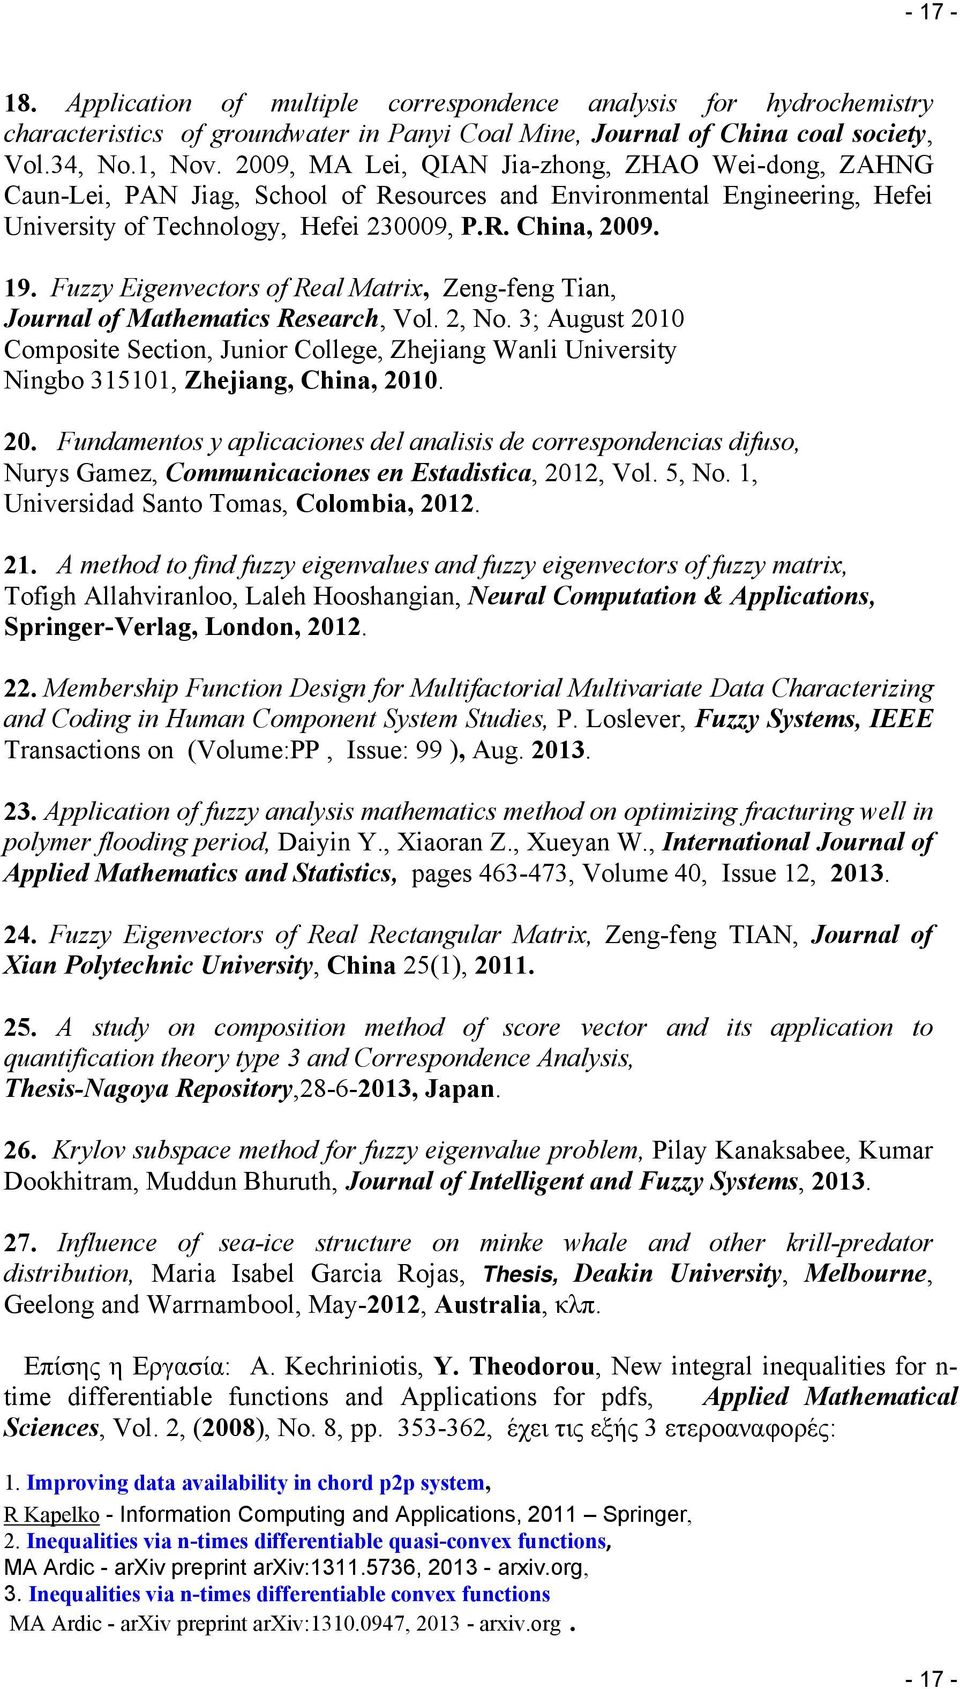 Fuzzy Eigenvectors of Real Matrix, Zeng-feng Tian, Journal of Mathematics Research, Vol. 2, No.